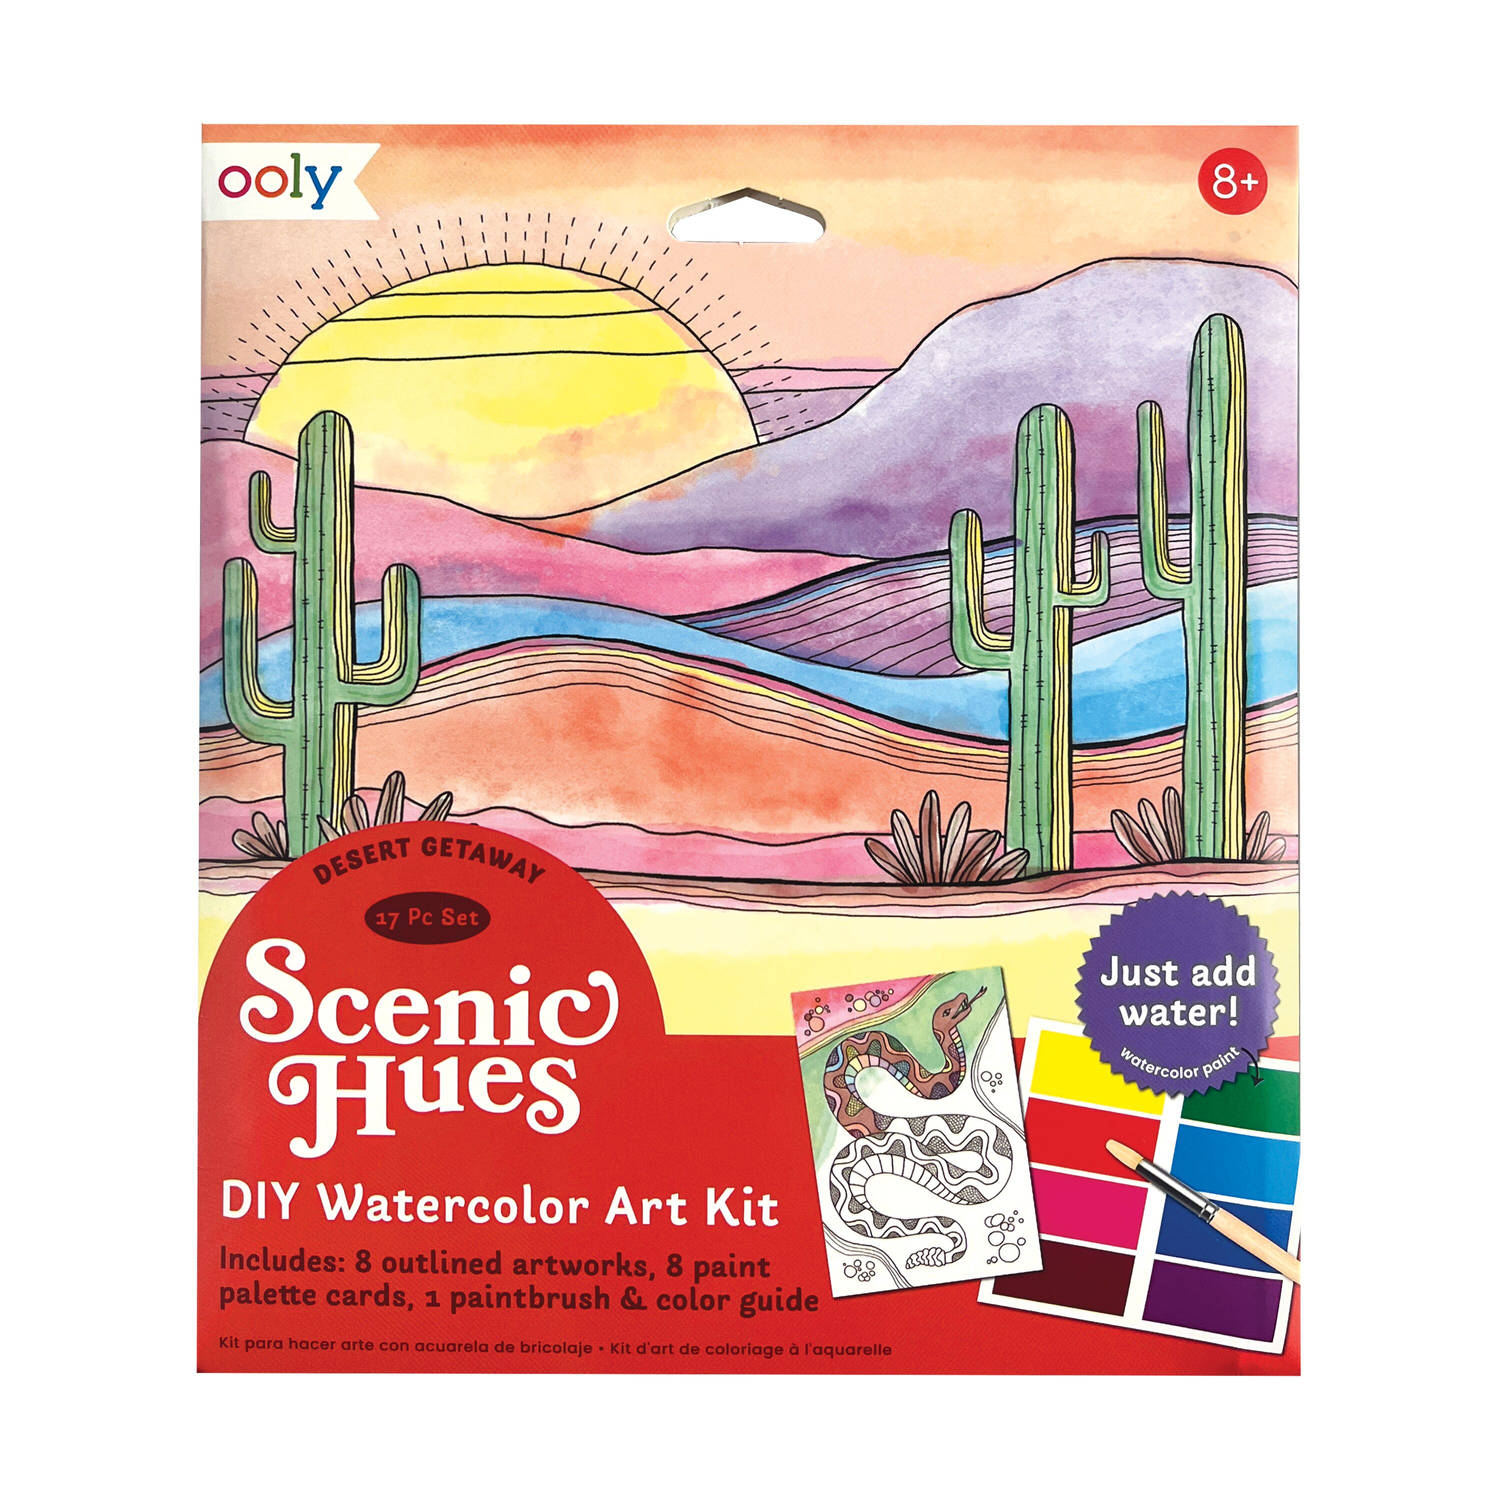 Ooly - Scenic Hues D.I.Y. Watercolor Art Kit - Desert Getaway (17 PC Set)